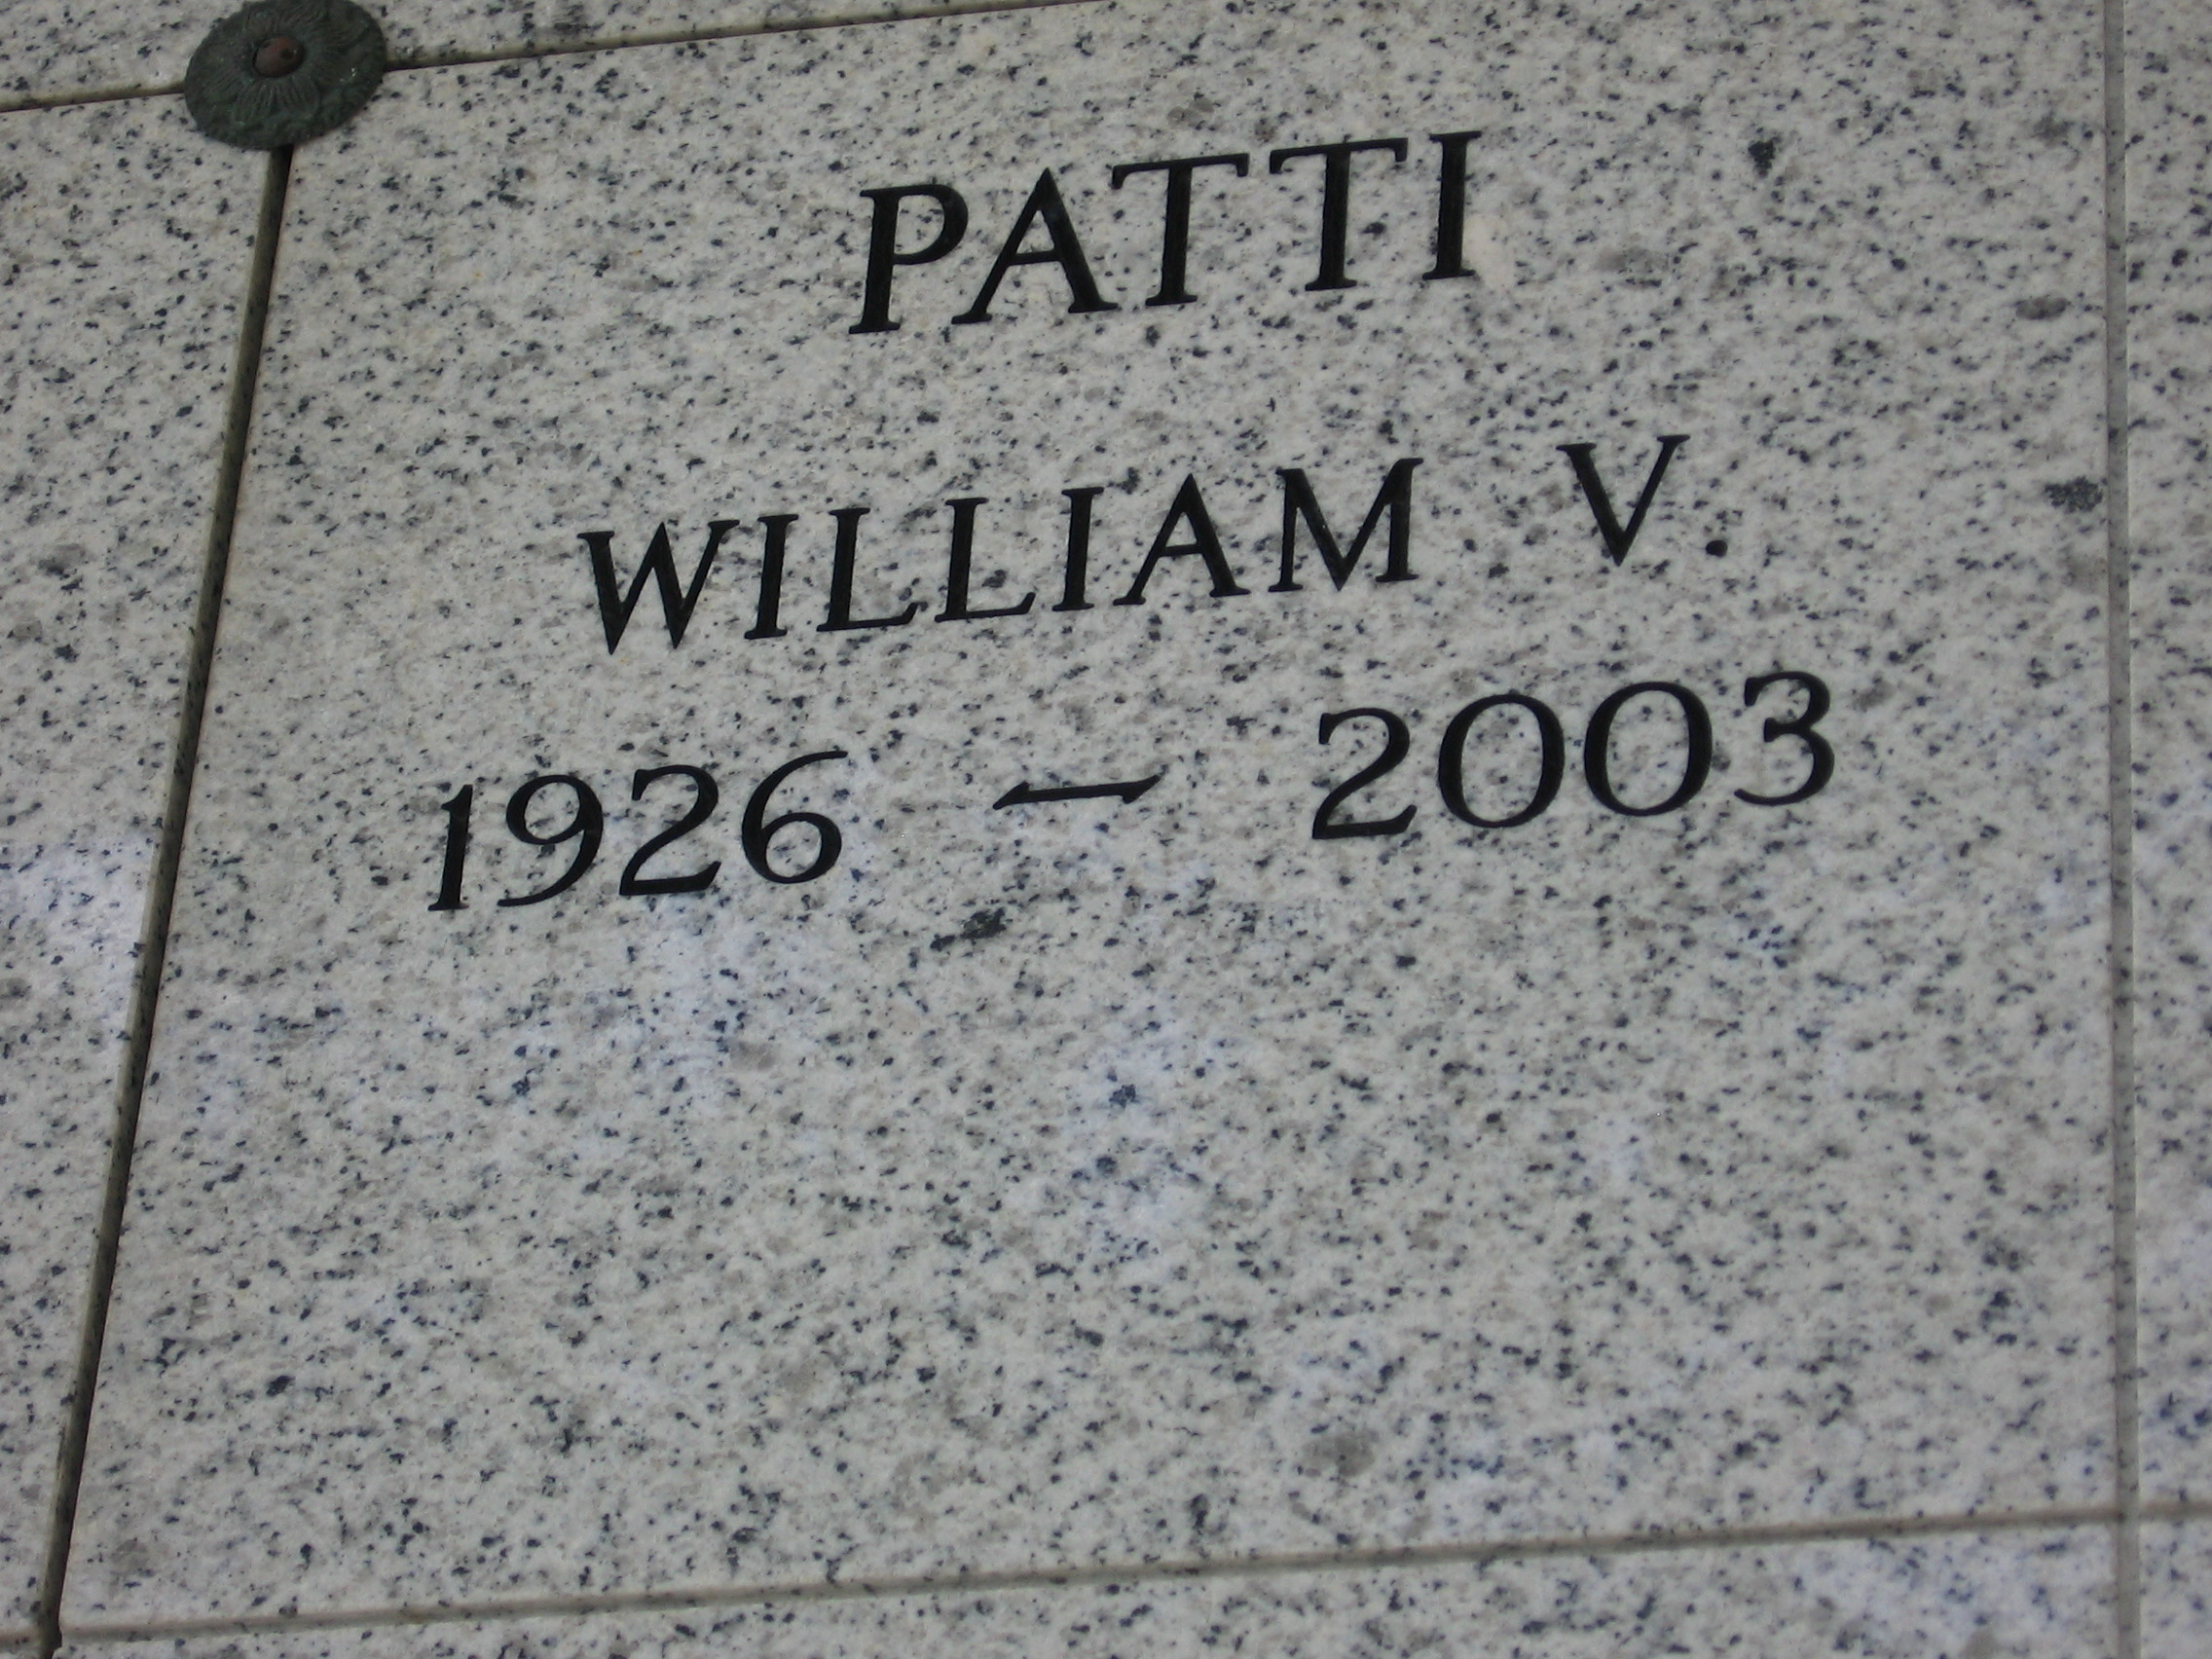 William V Patti